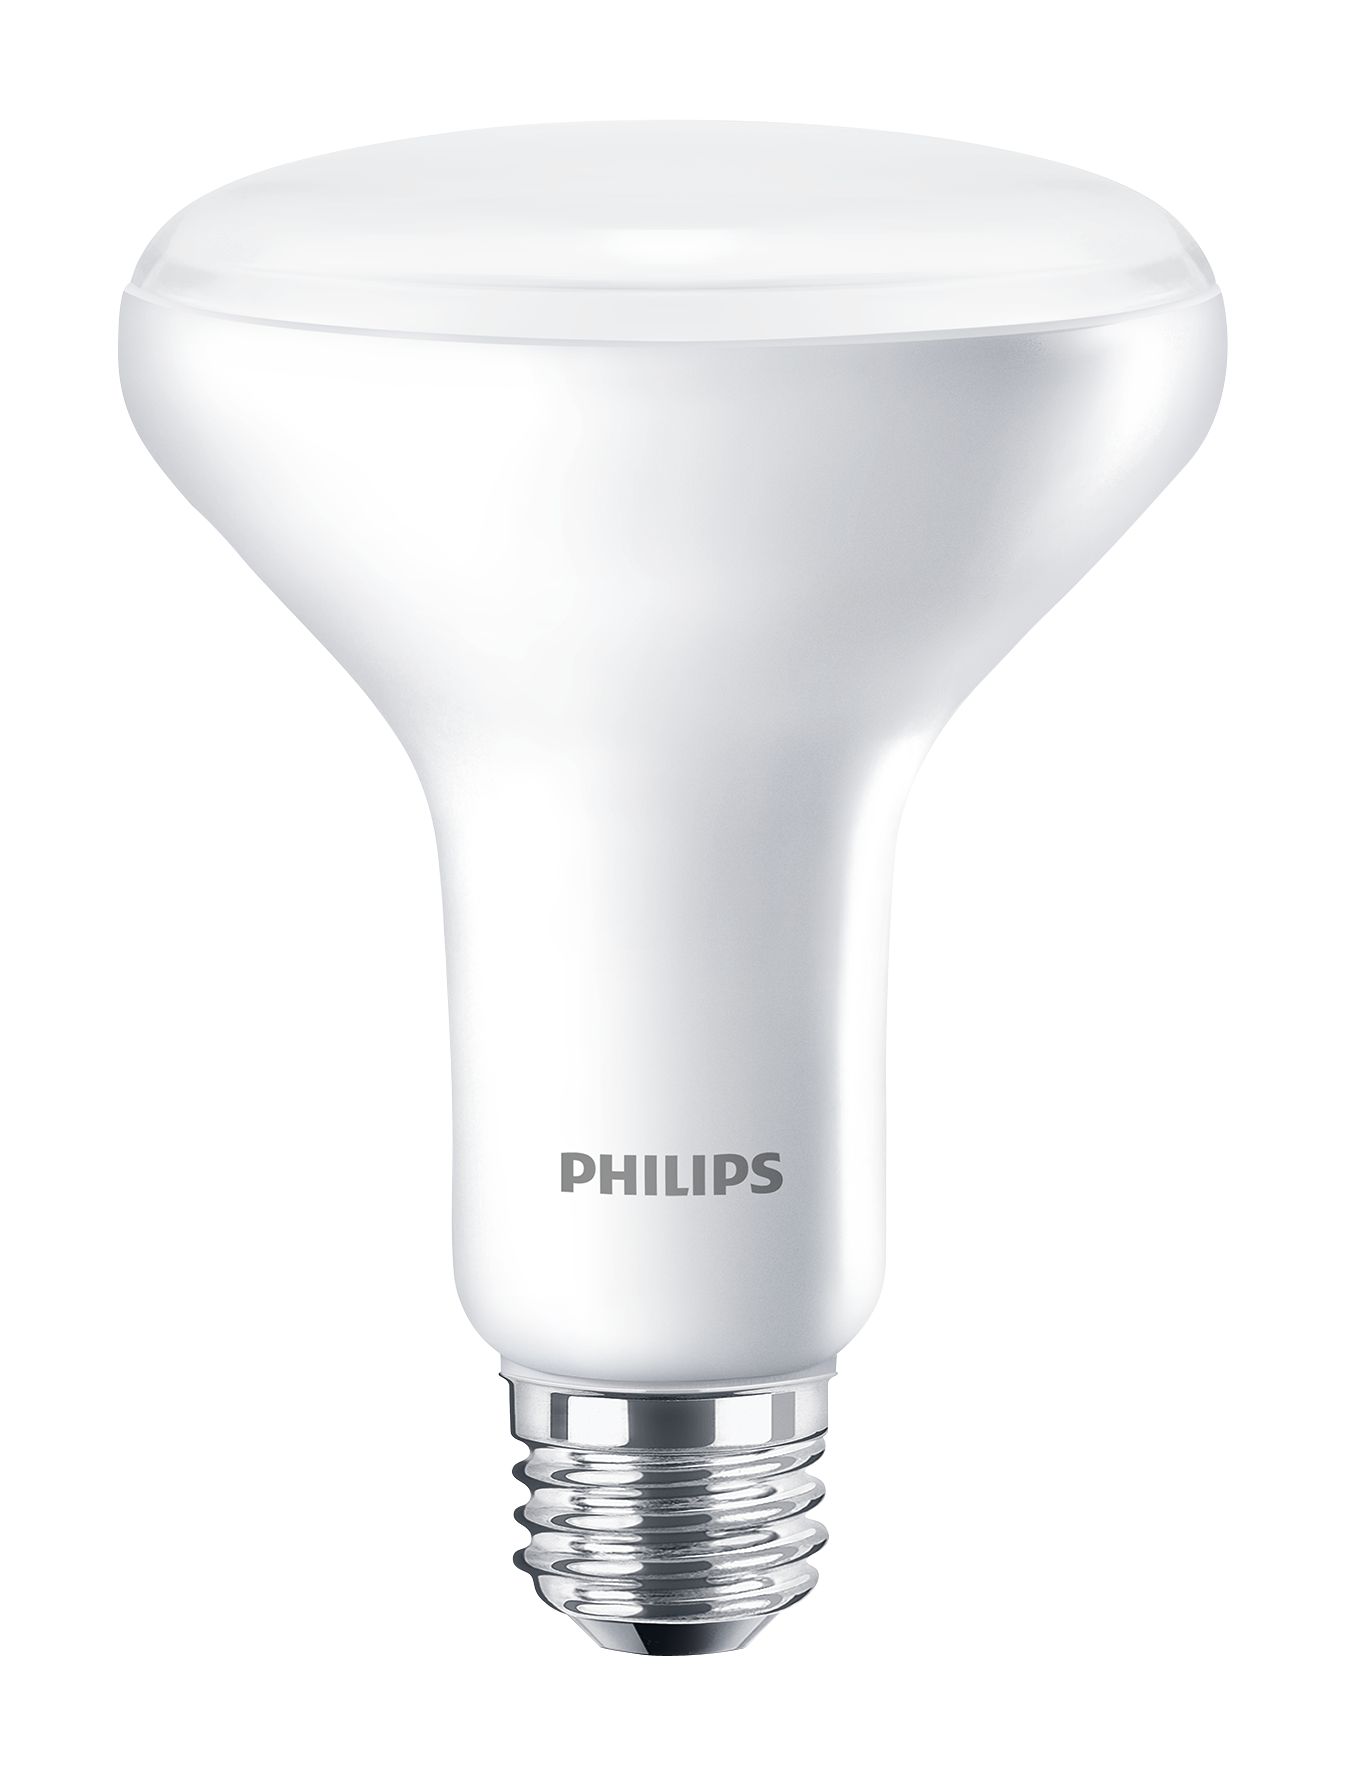 LED BR30 7403313 | Philips lighting US